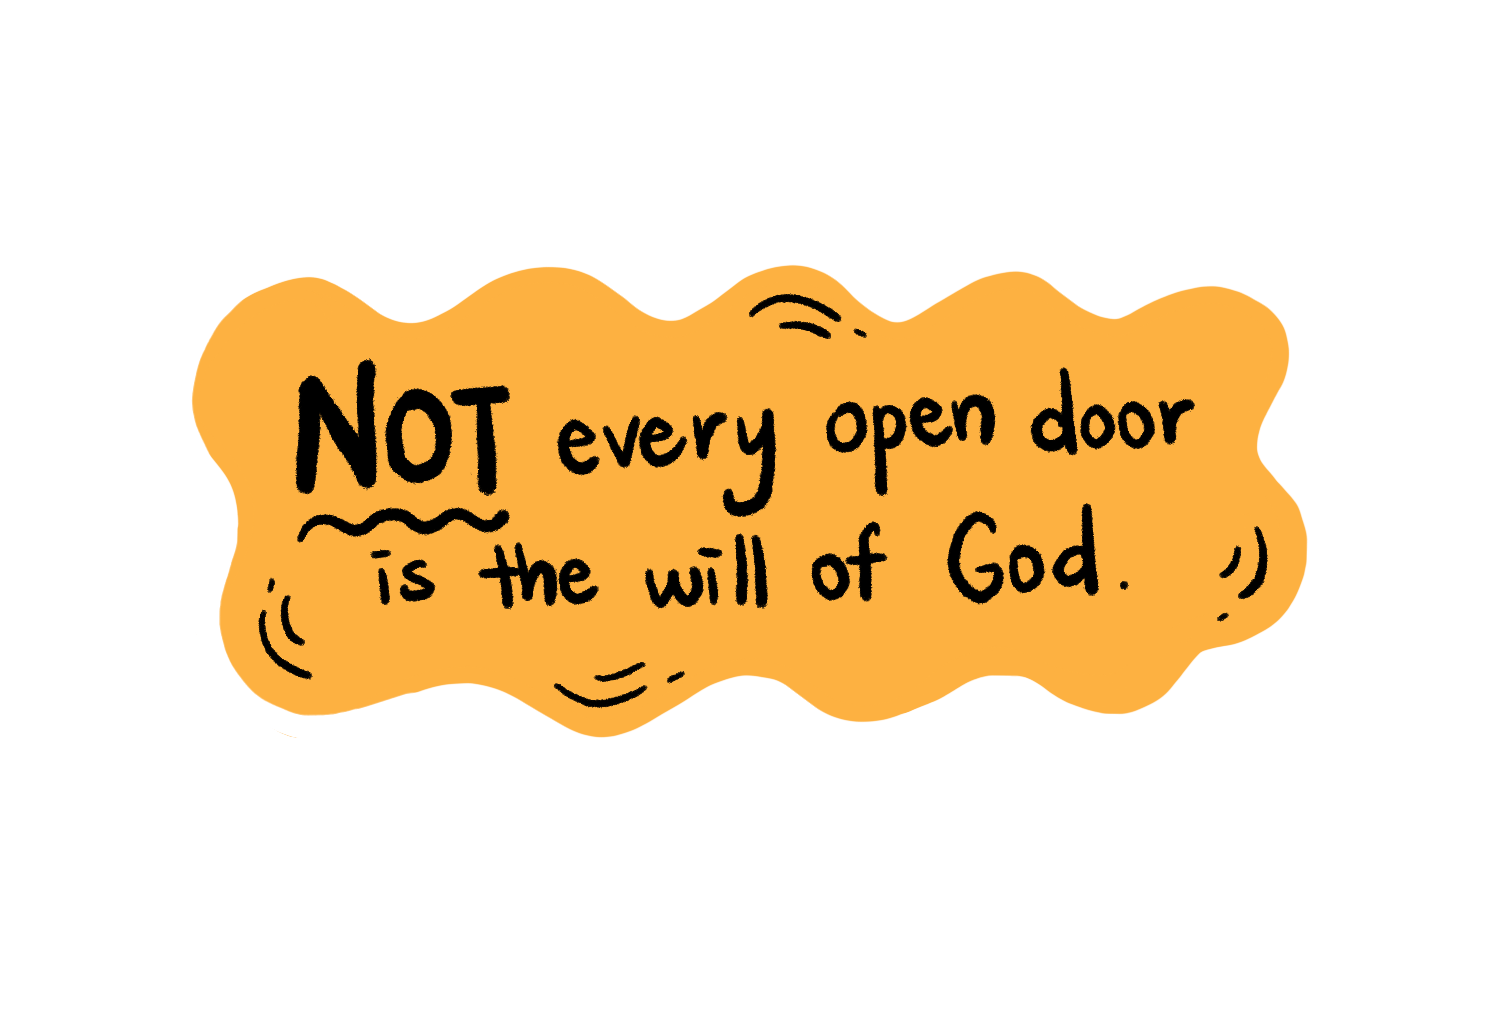 Not every open door is the will of God.